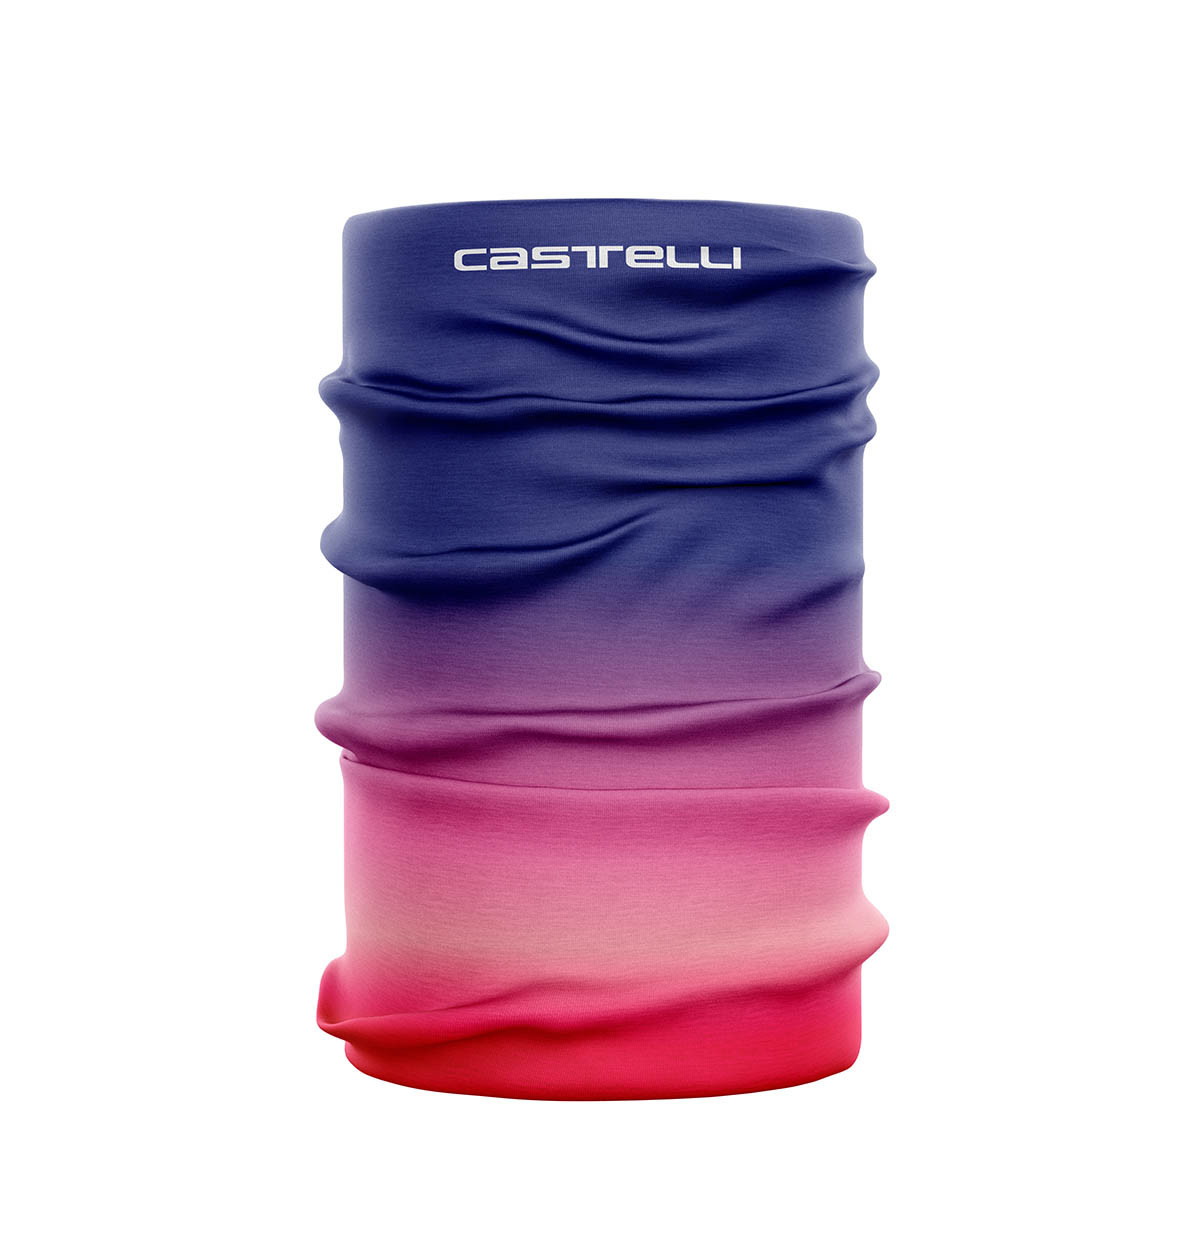 Castelli Light W Head Thingy - Lapis Blue